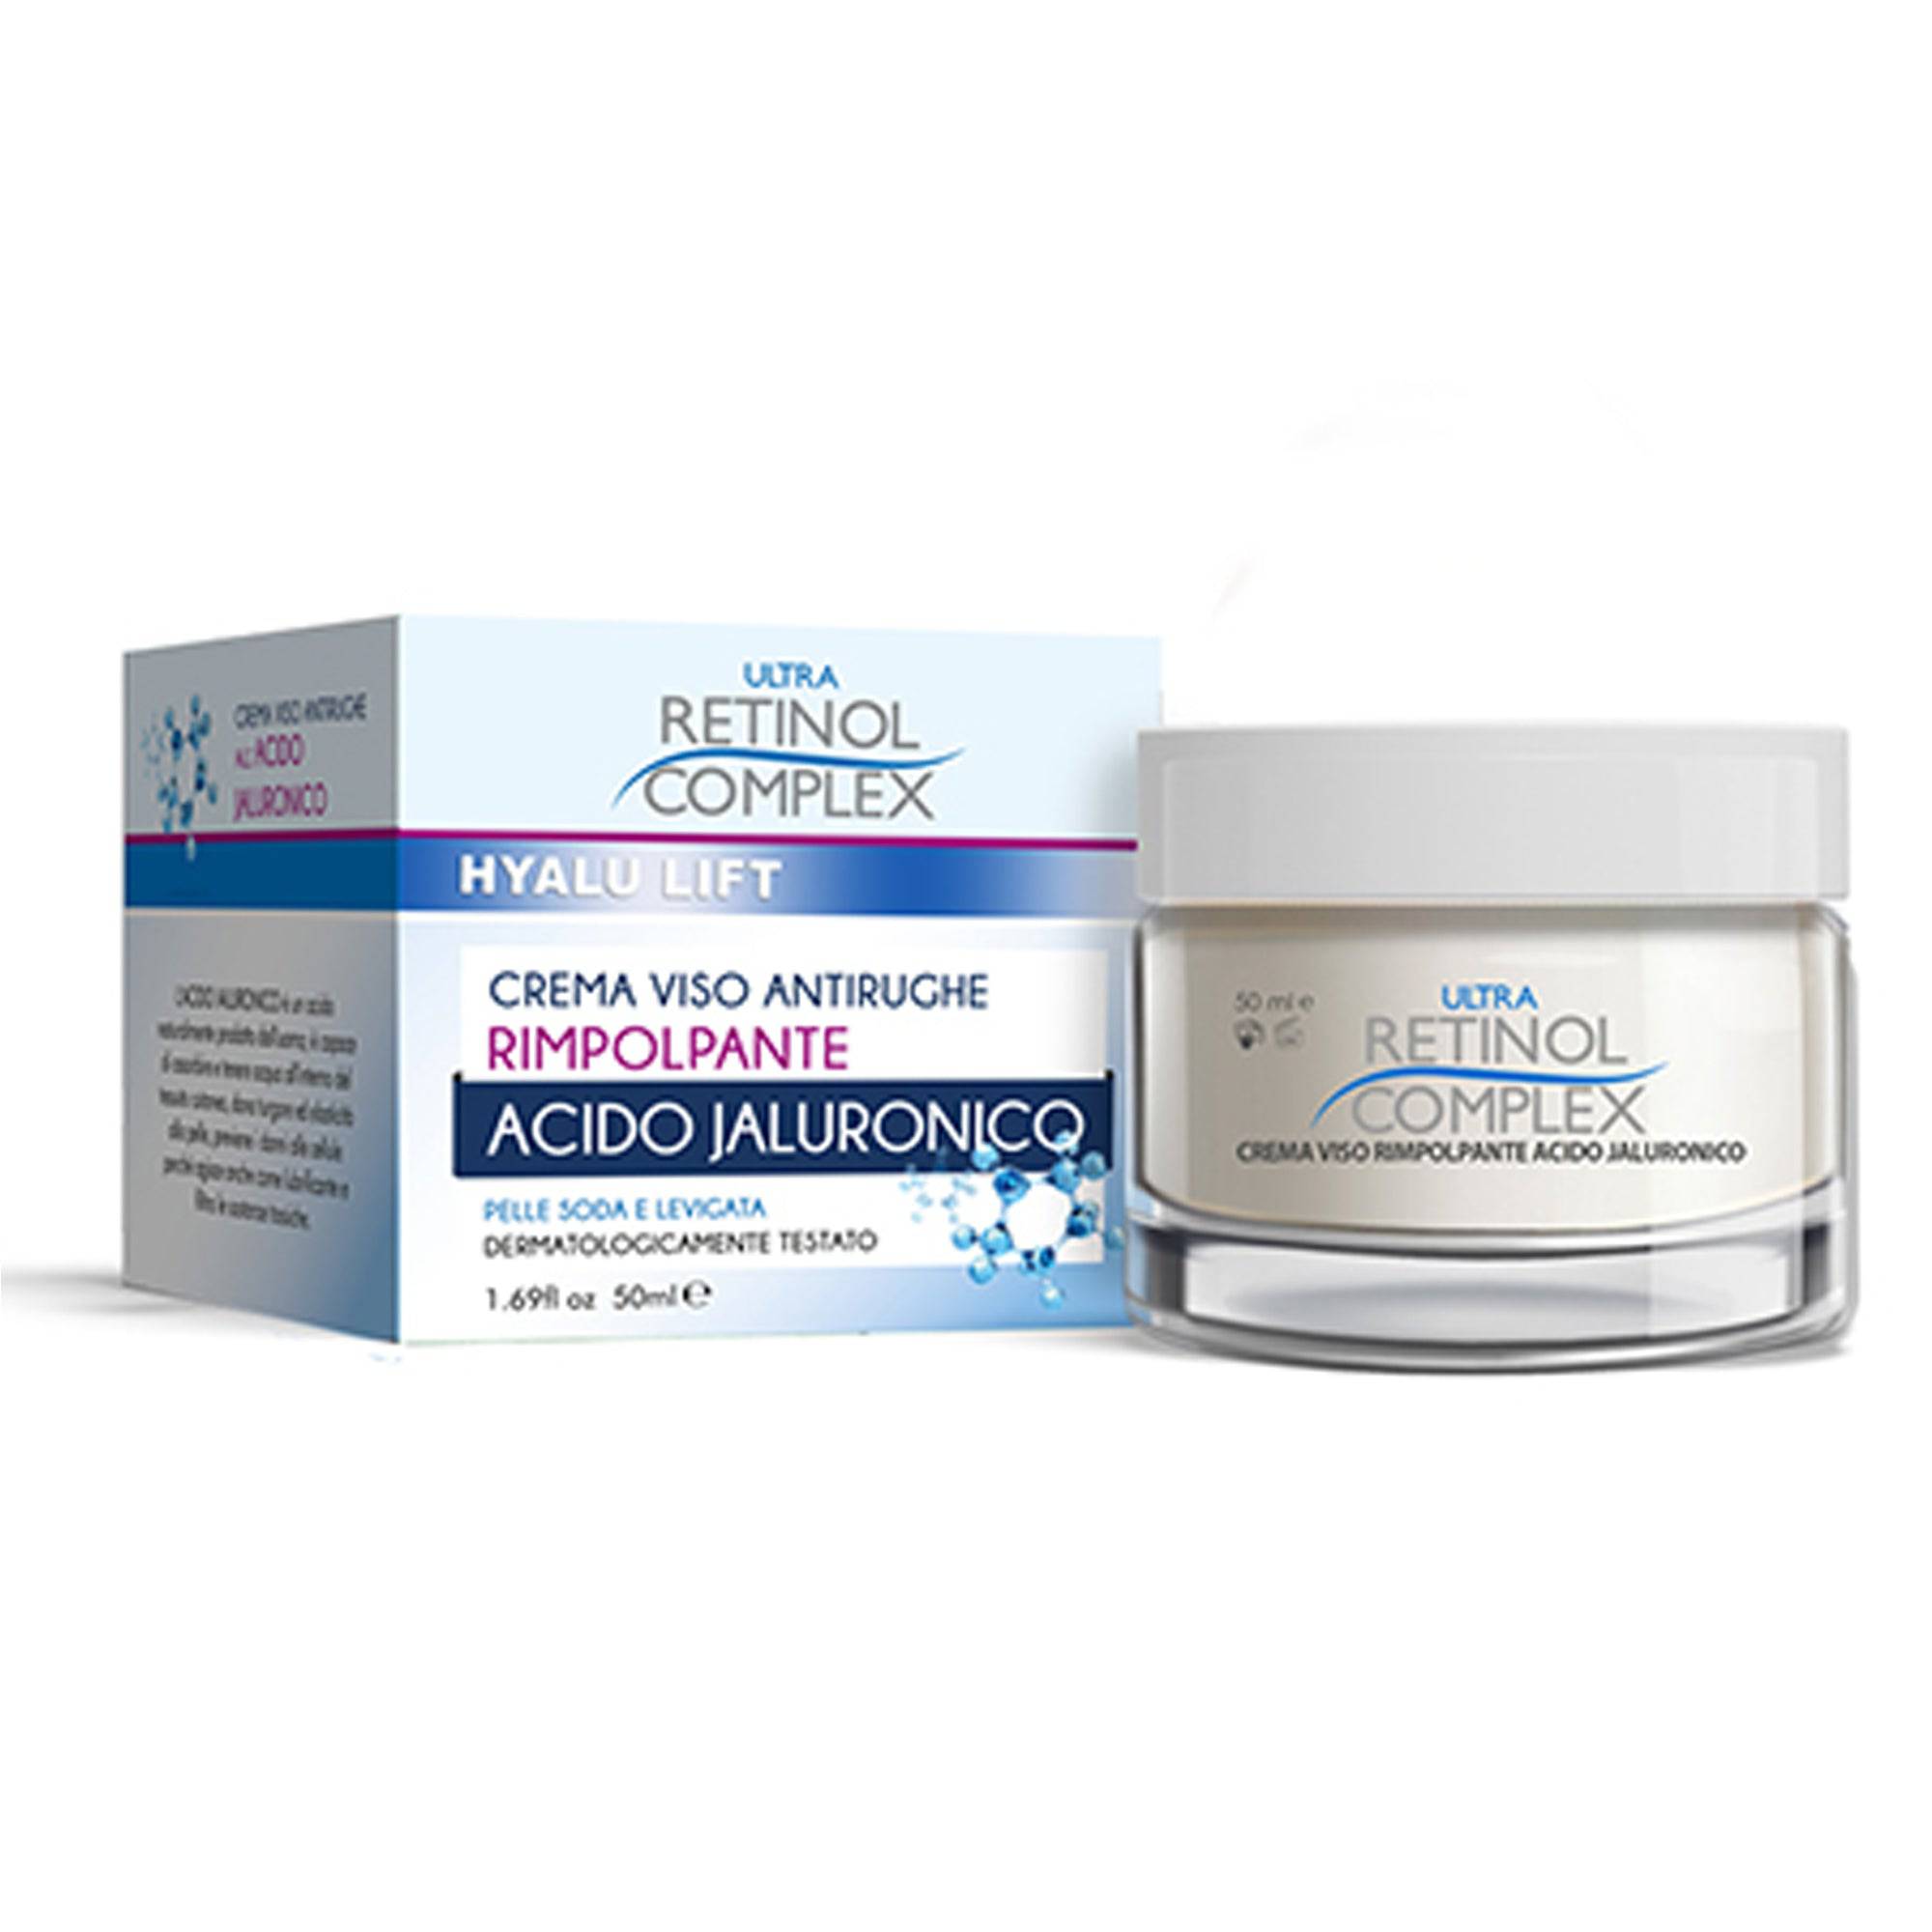 Ultra Retinol Complex Crema Viso Rimpolpante Acido Jaluronico - Jasmine Parfums- [ean]